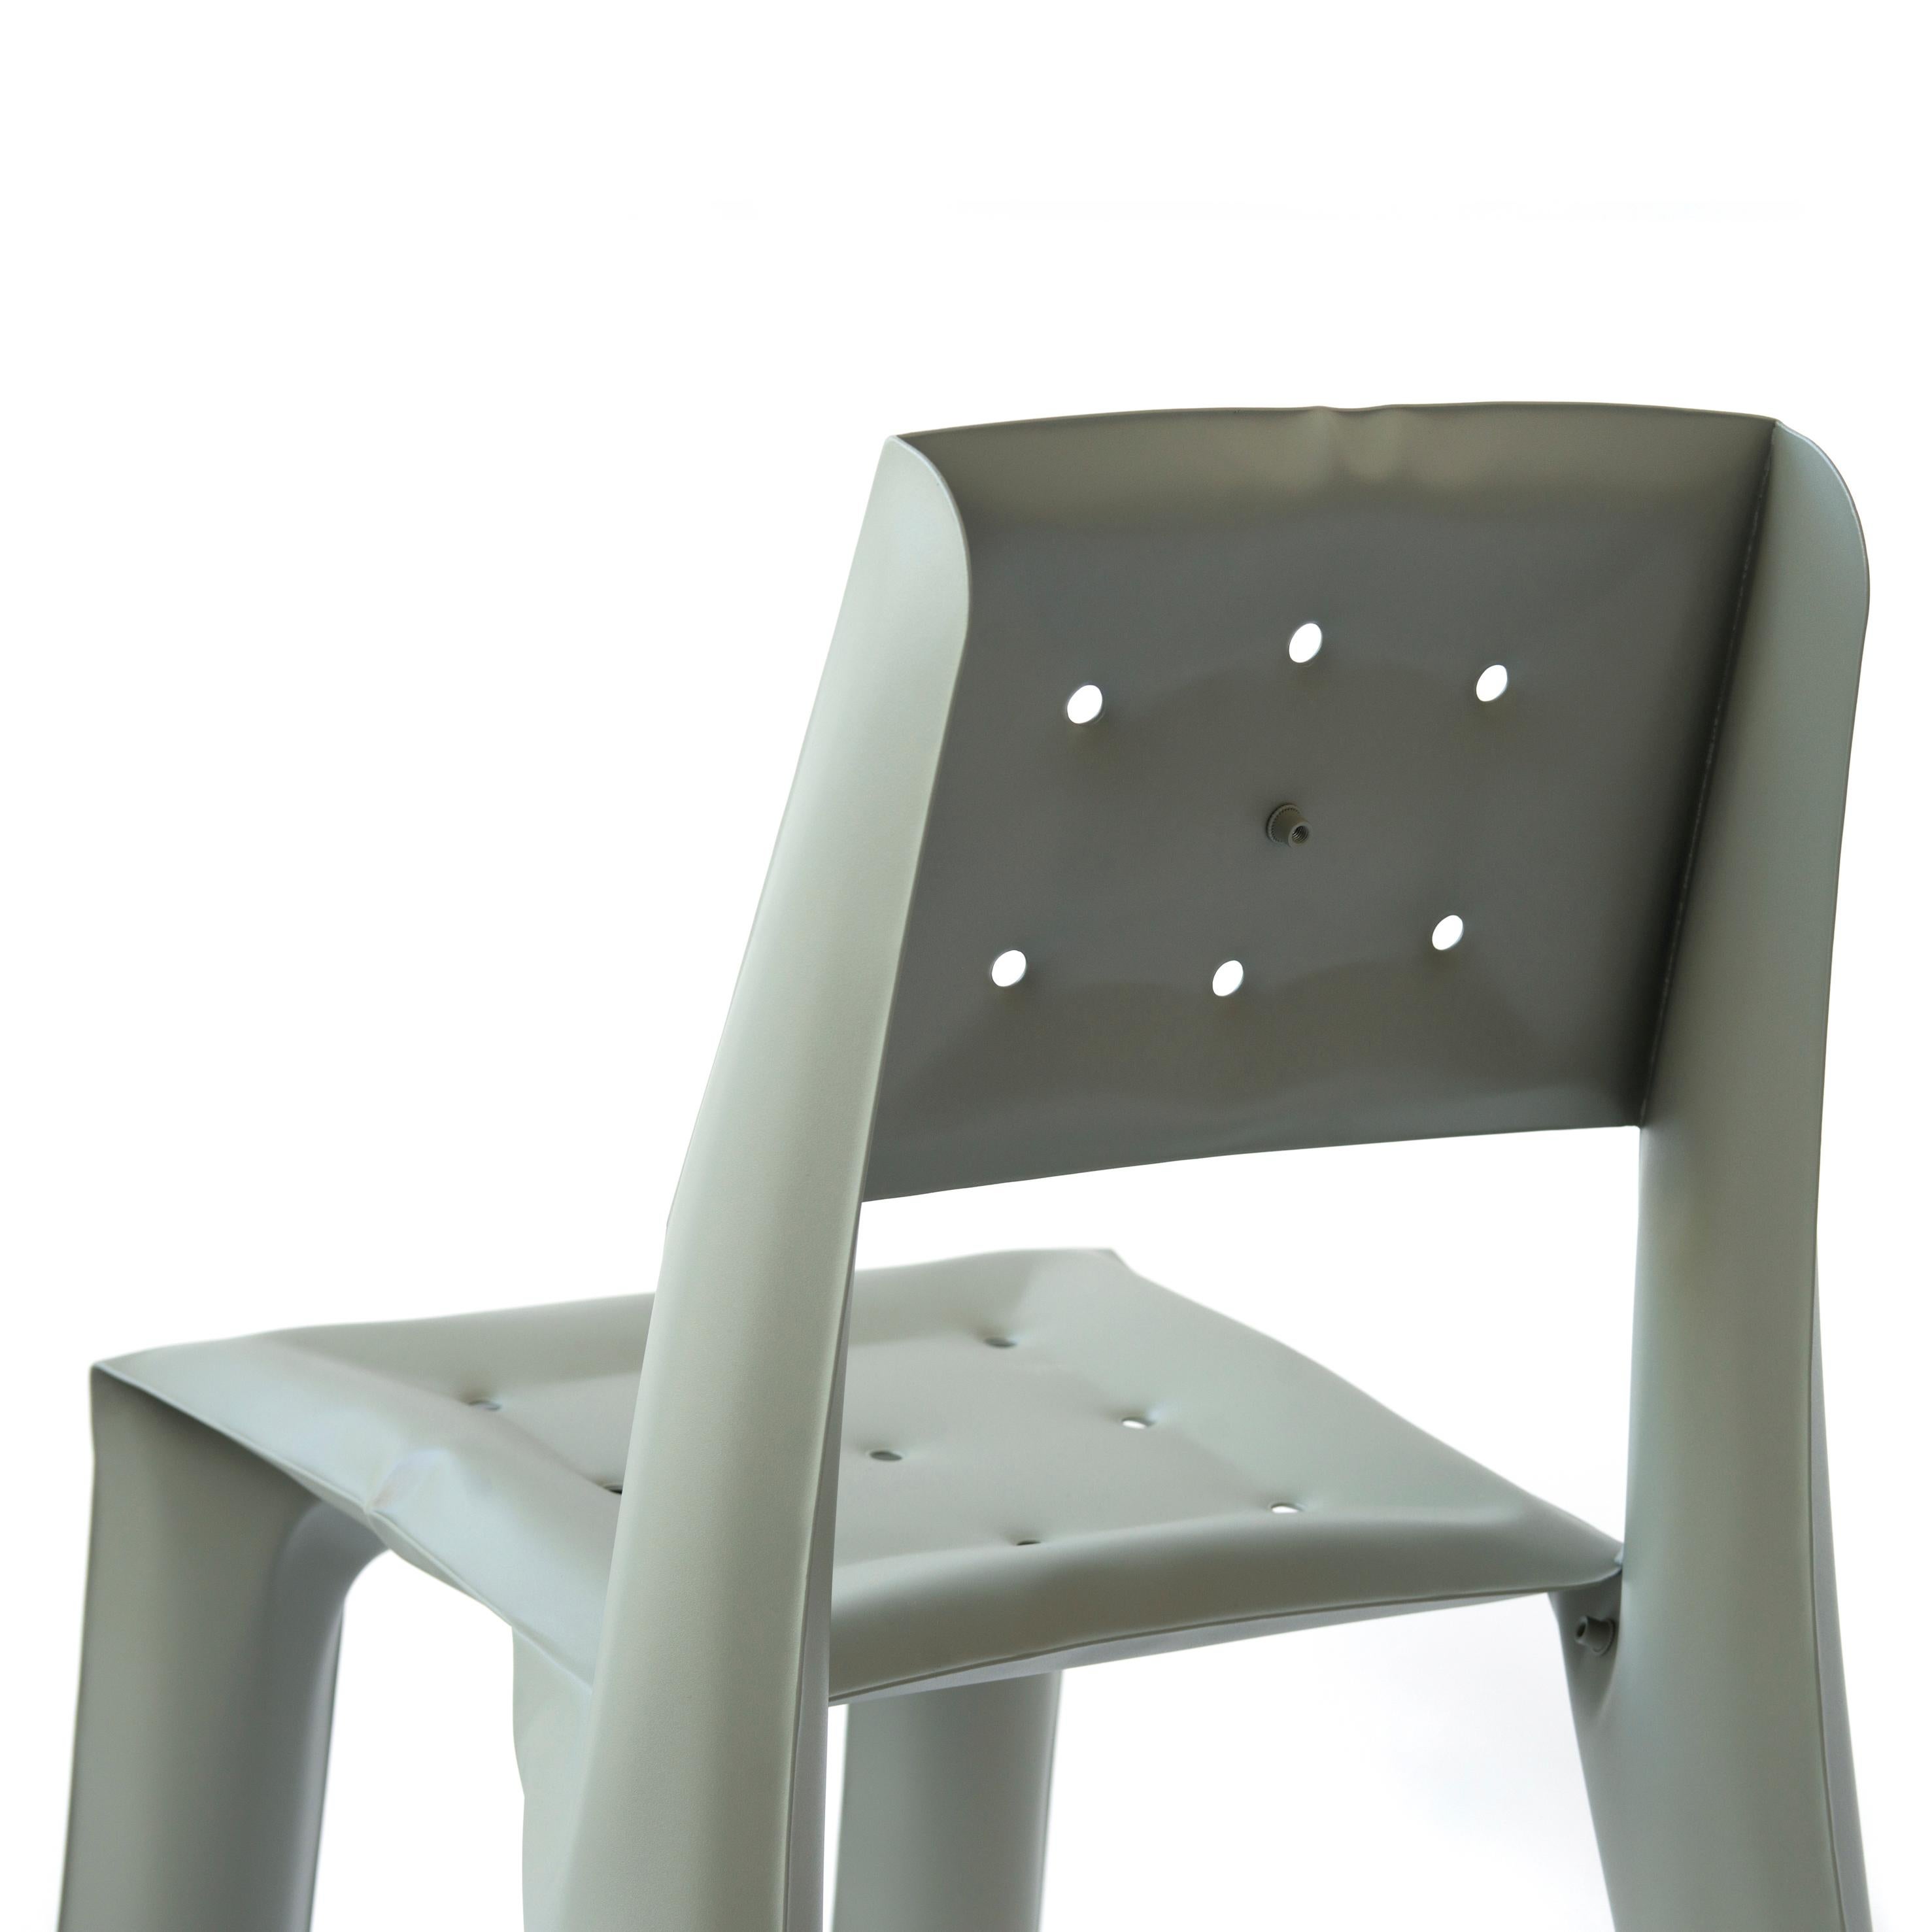 Moss Grey Aluminum Chippensteel 0.5 Sculptural Chair by Zieta For Sale 1